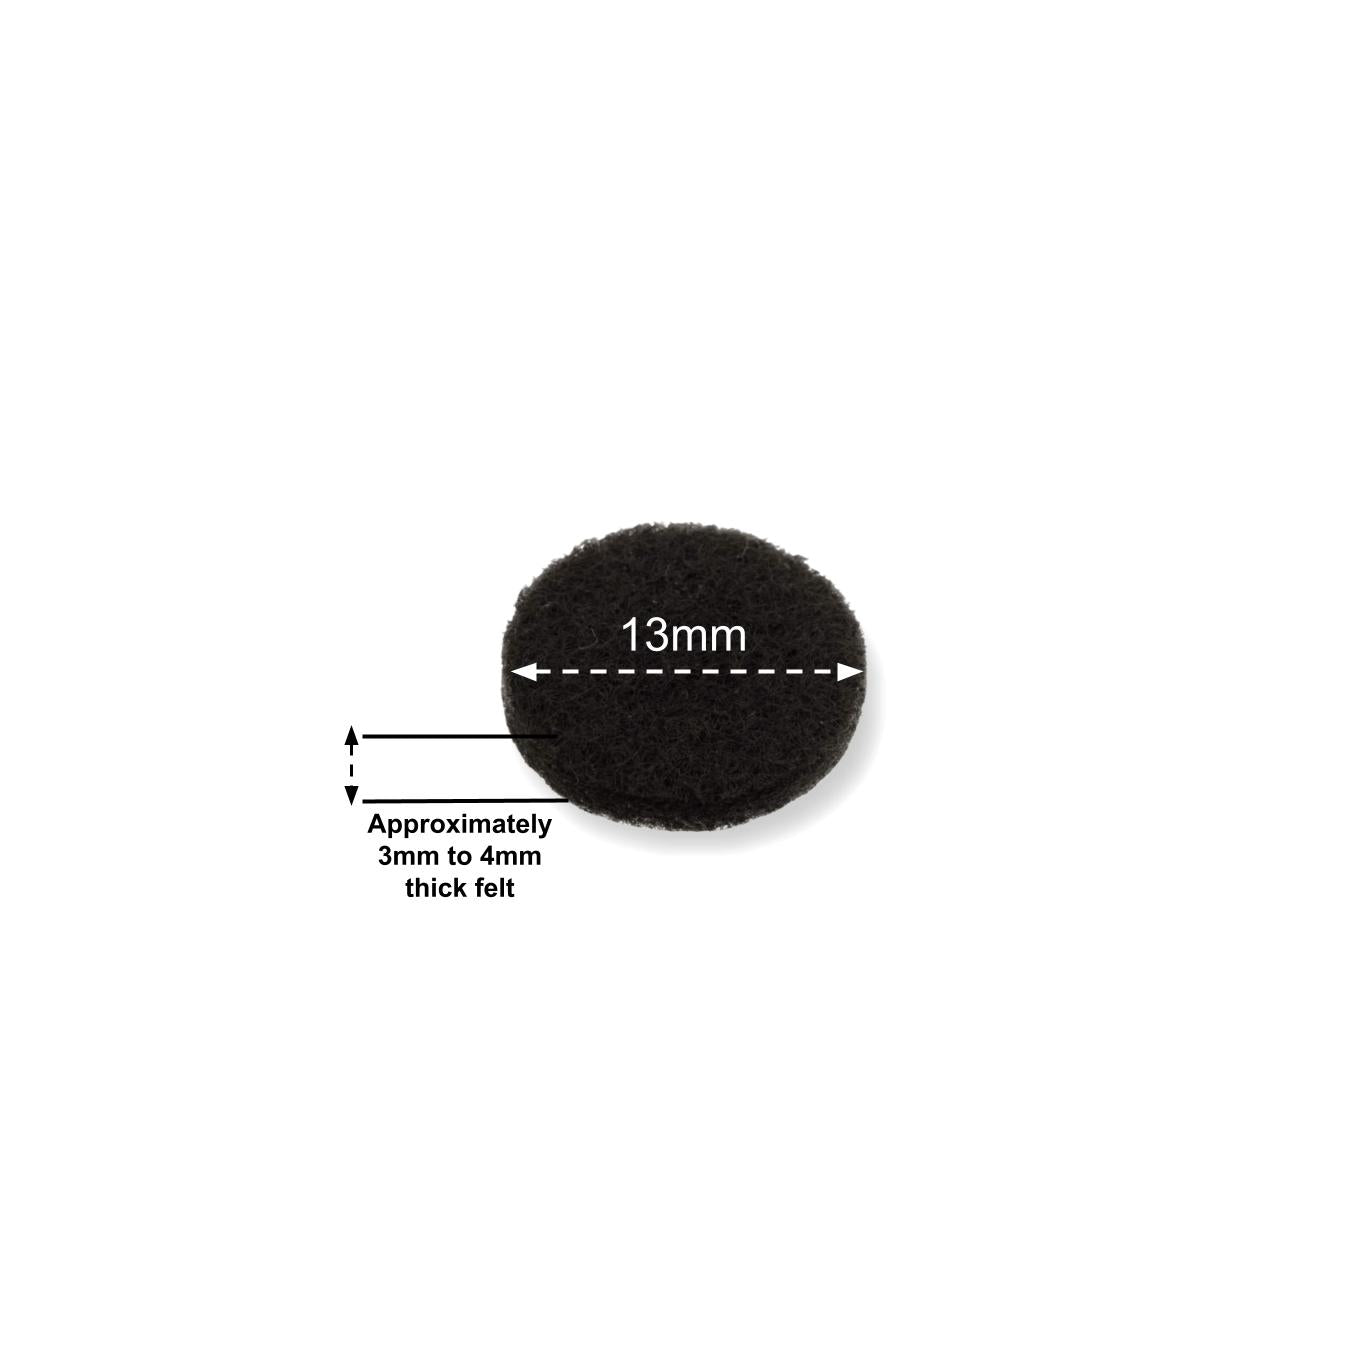 Felt Pads - Dark Brown Self Adhesive Stick on Felt - Round 13mm Diameter - Made in Germany